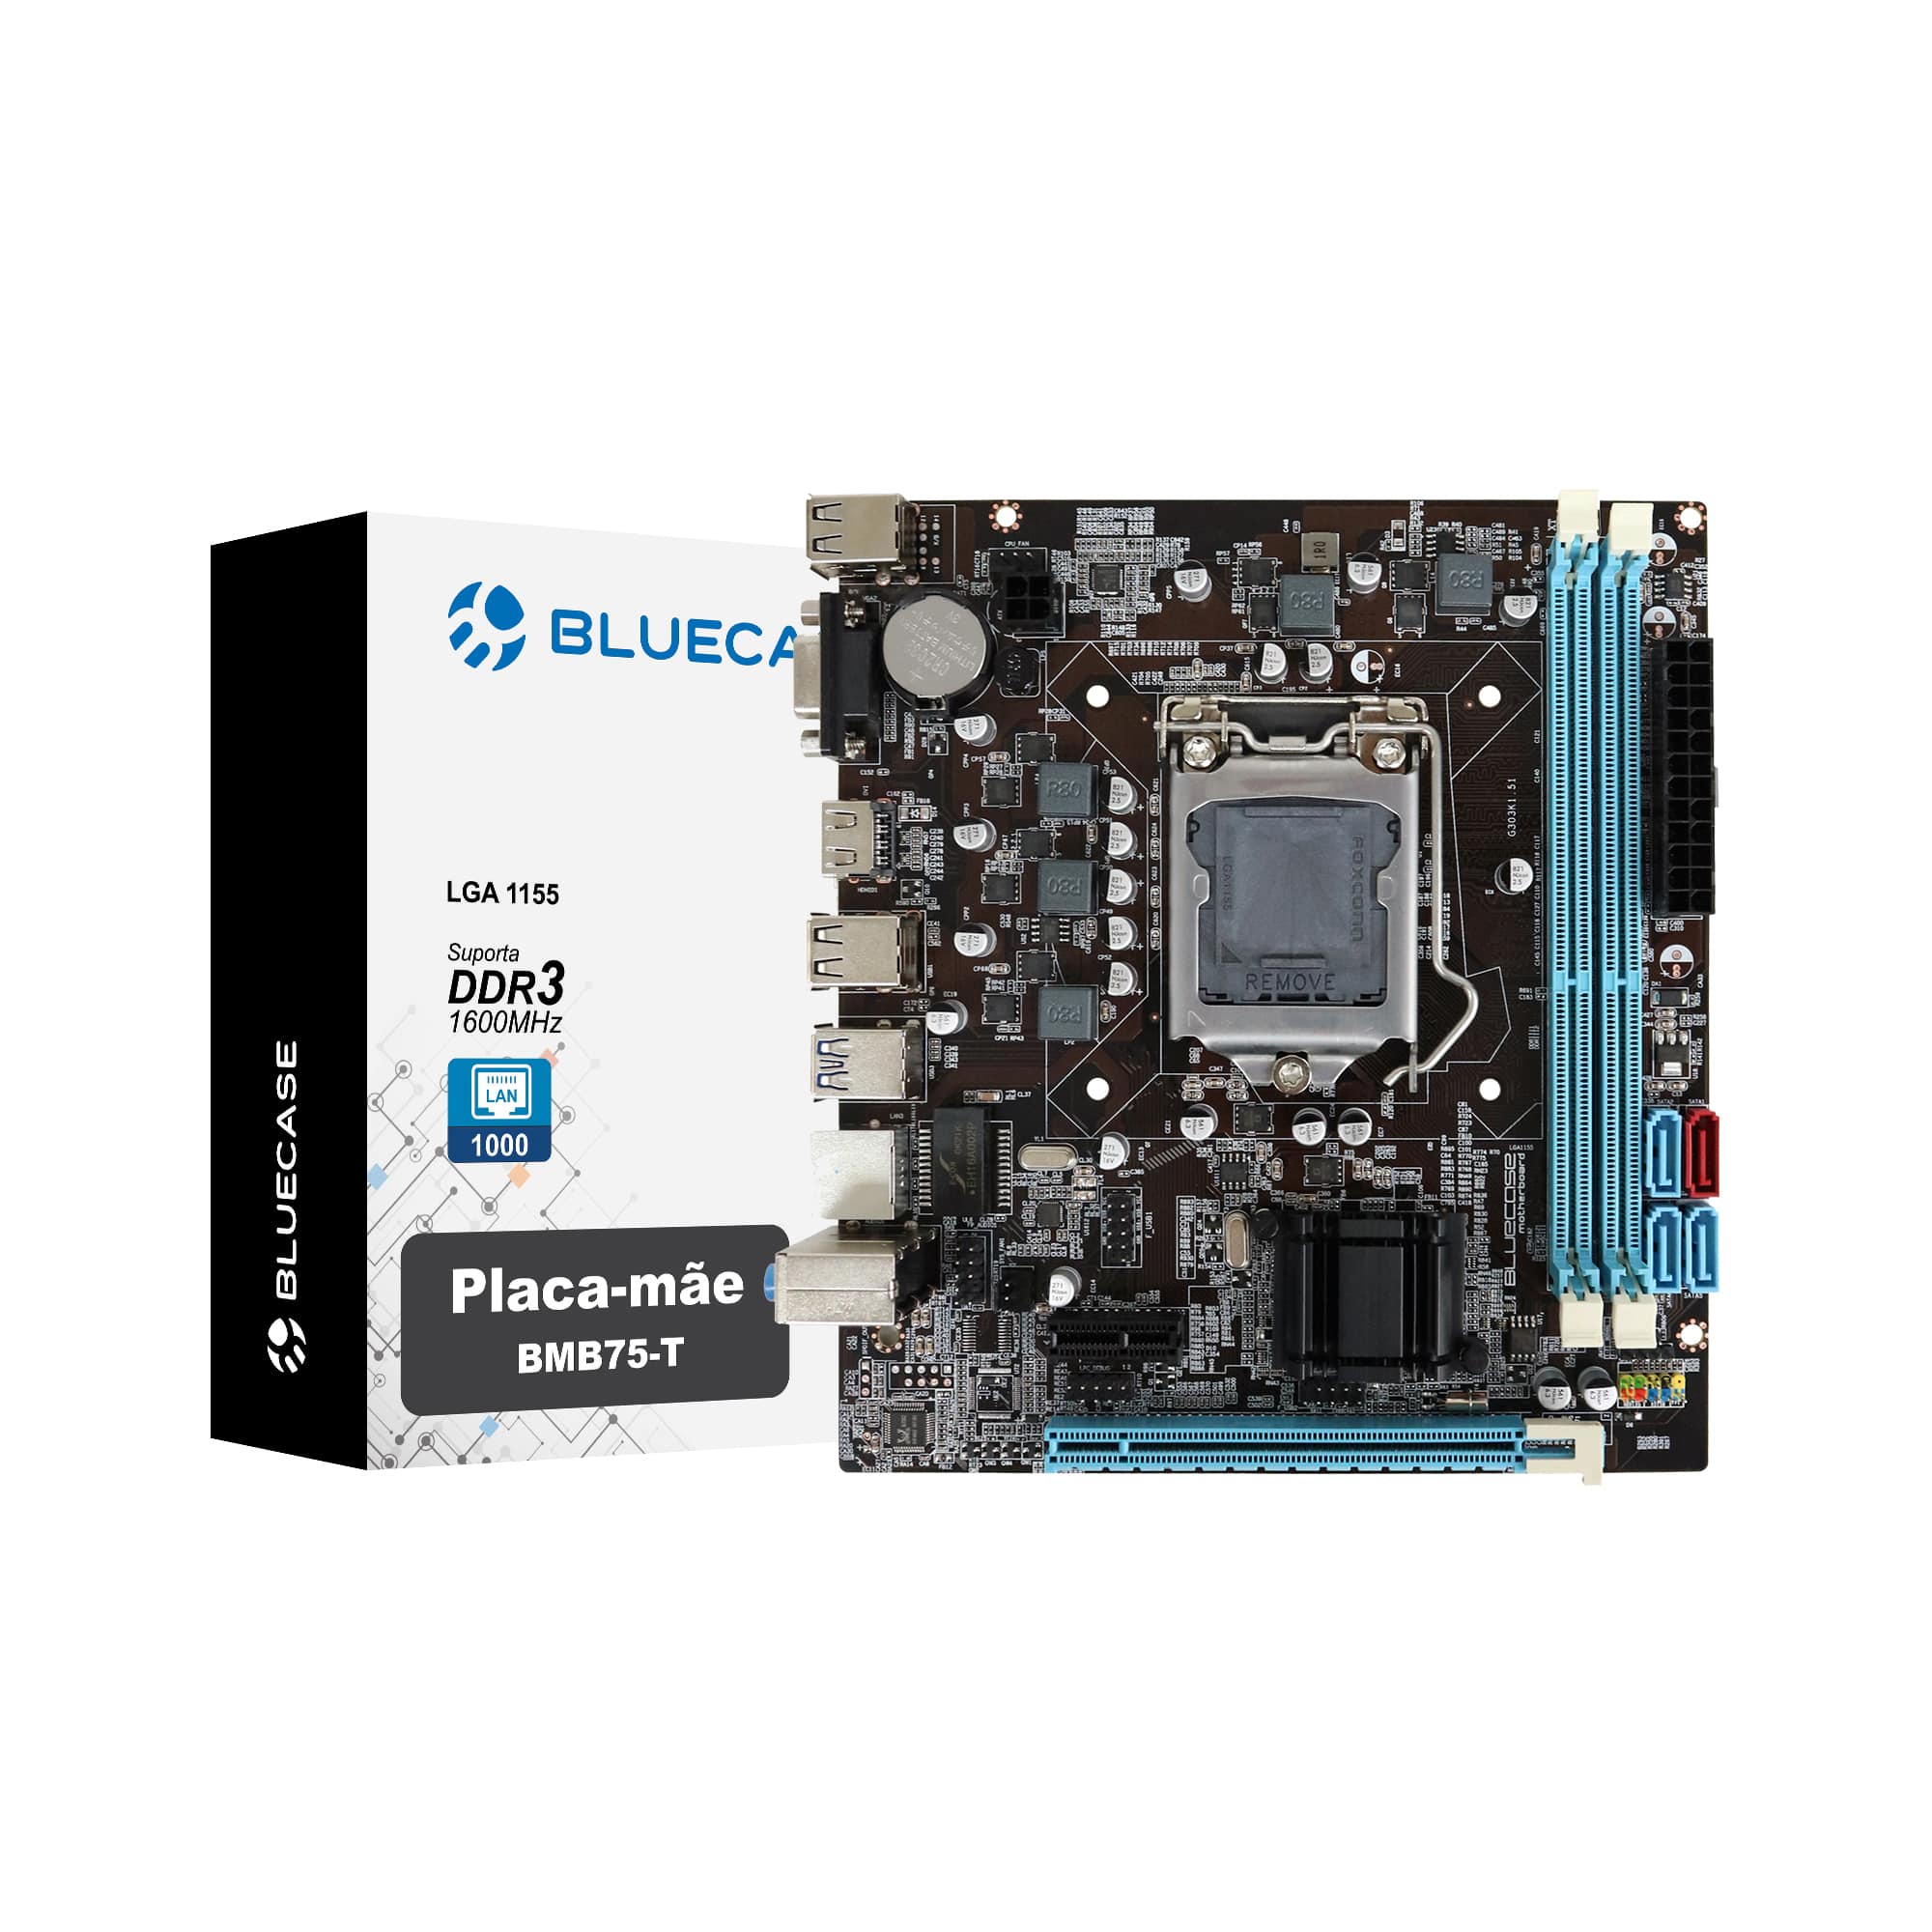 Placa-mãe Bluecase BMB75-T, LGA 1155, DDR3, Gigabit - BMB75TCASE - Foto 0